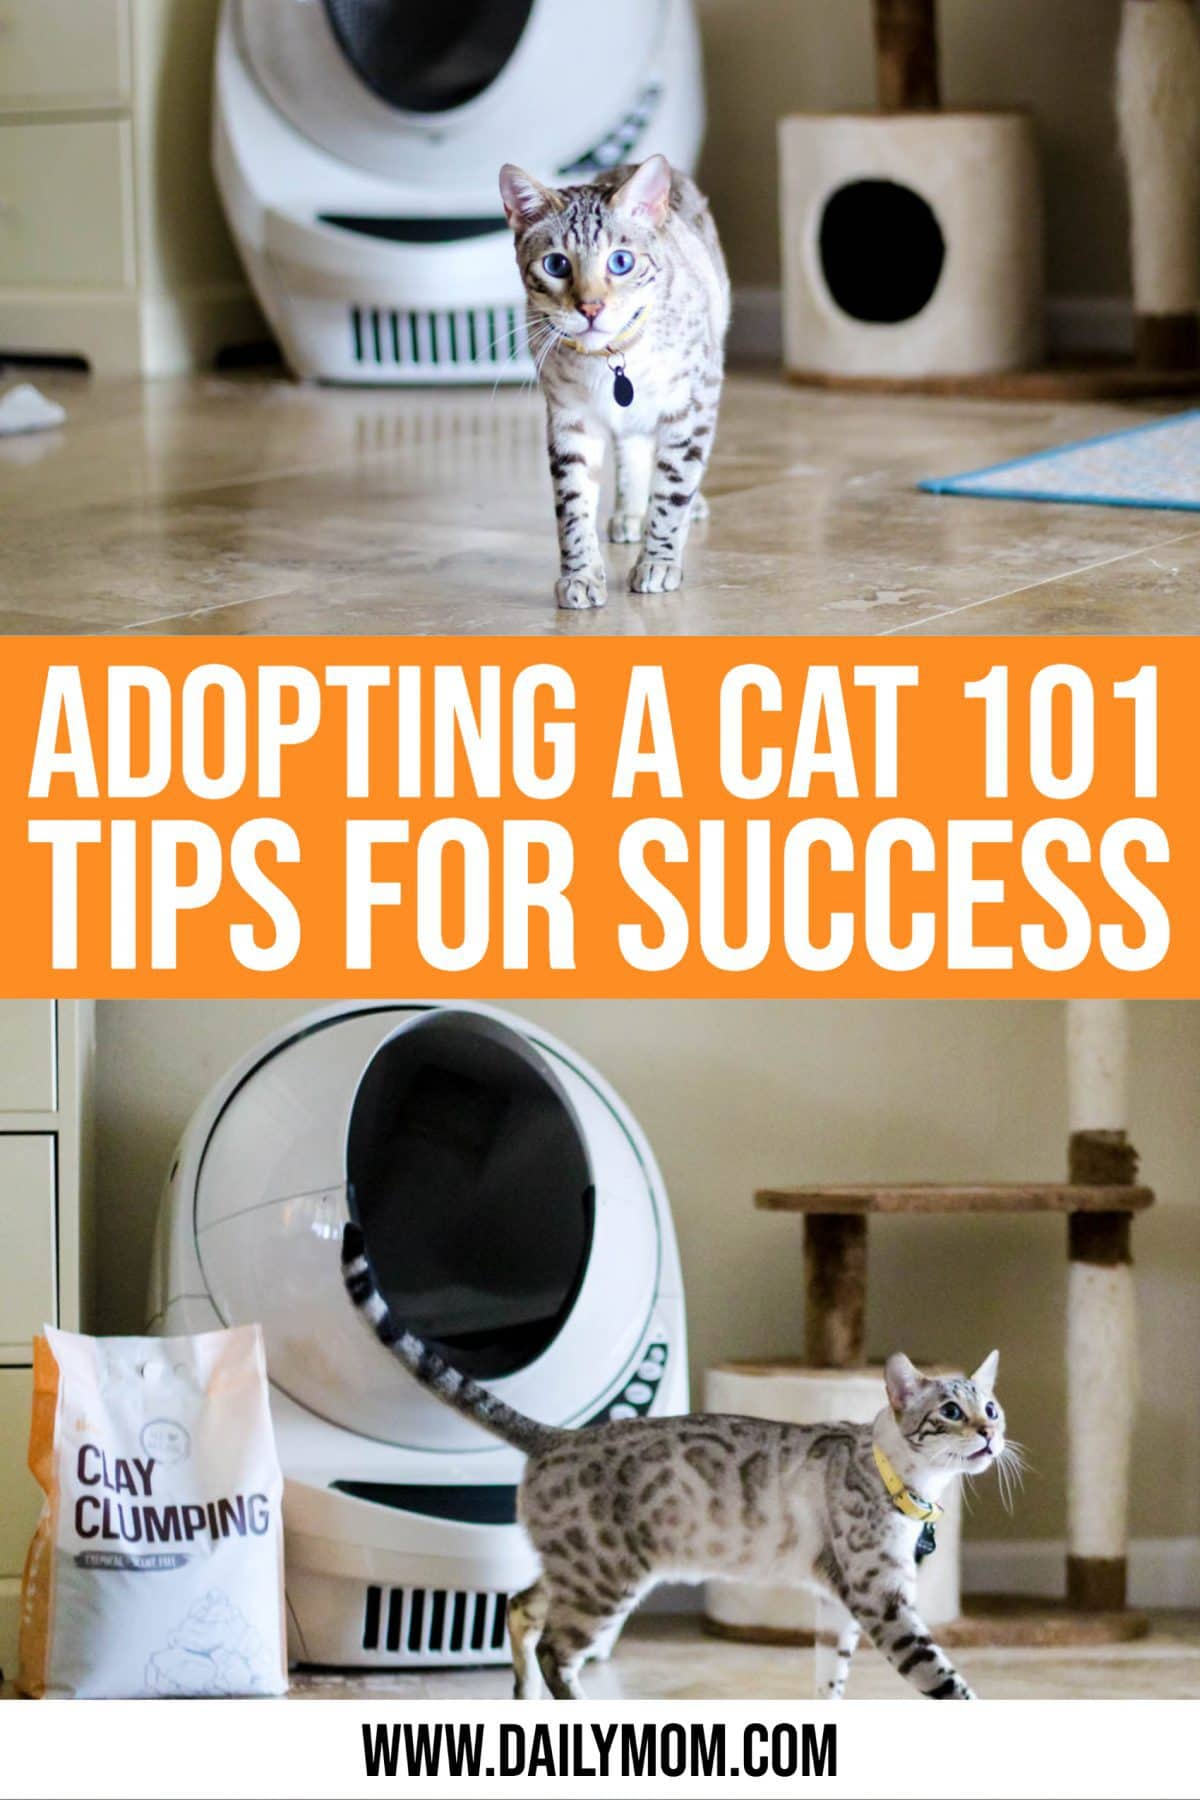 Adopting A Cat 101: Tips For Success